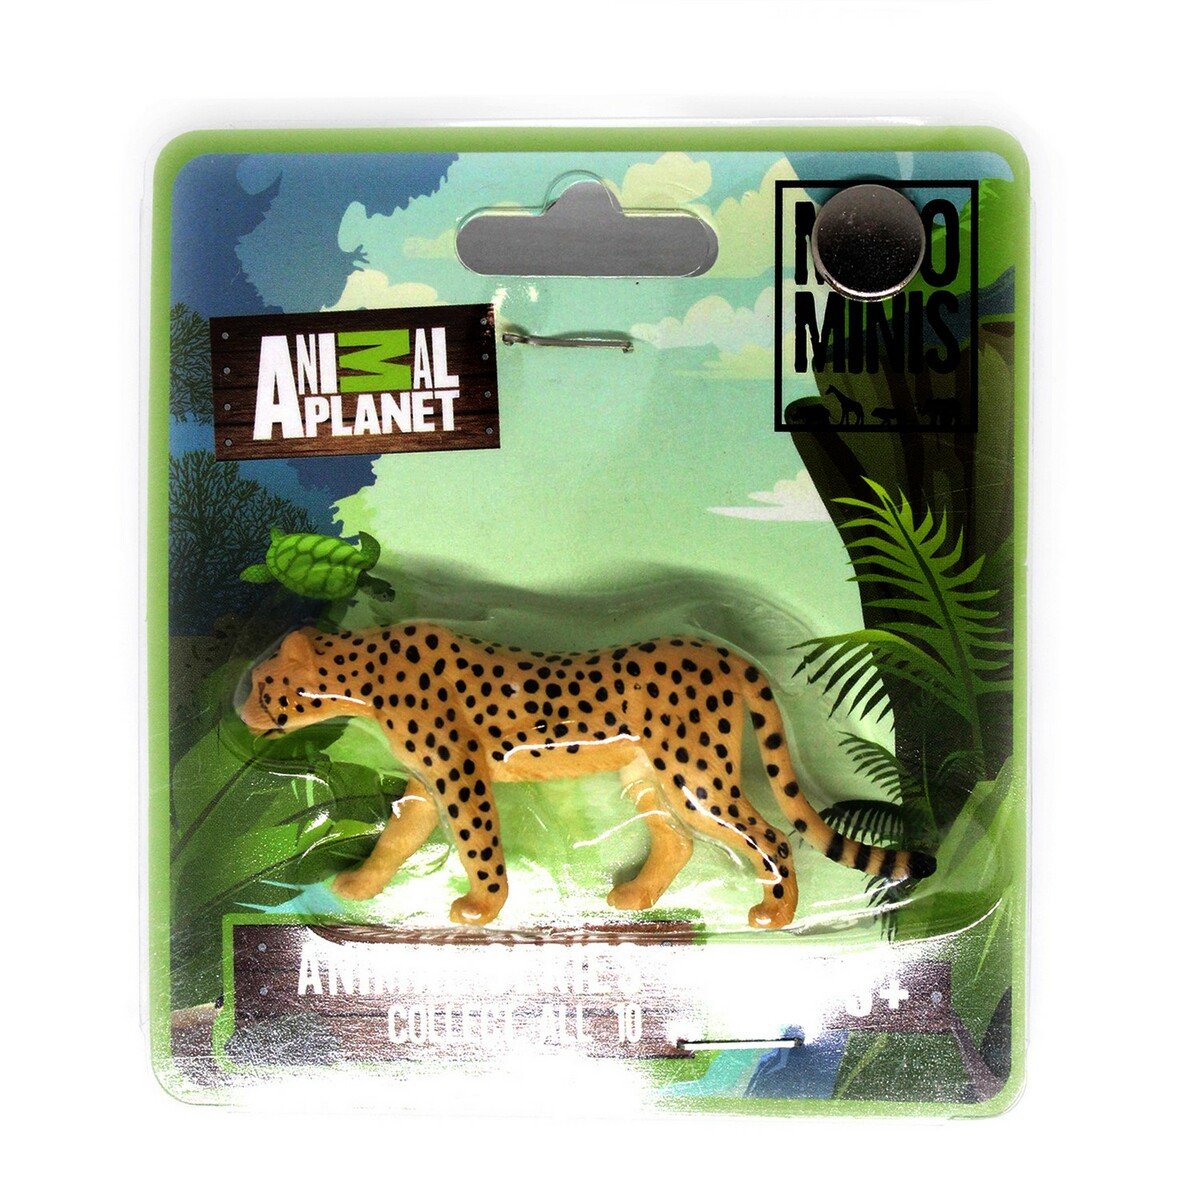 Mojo Minis Animal Planet Figures MJ-874251